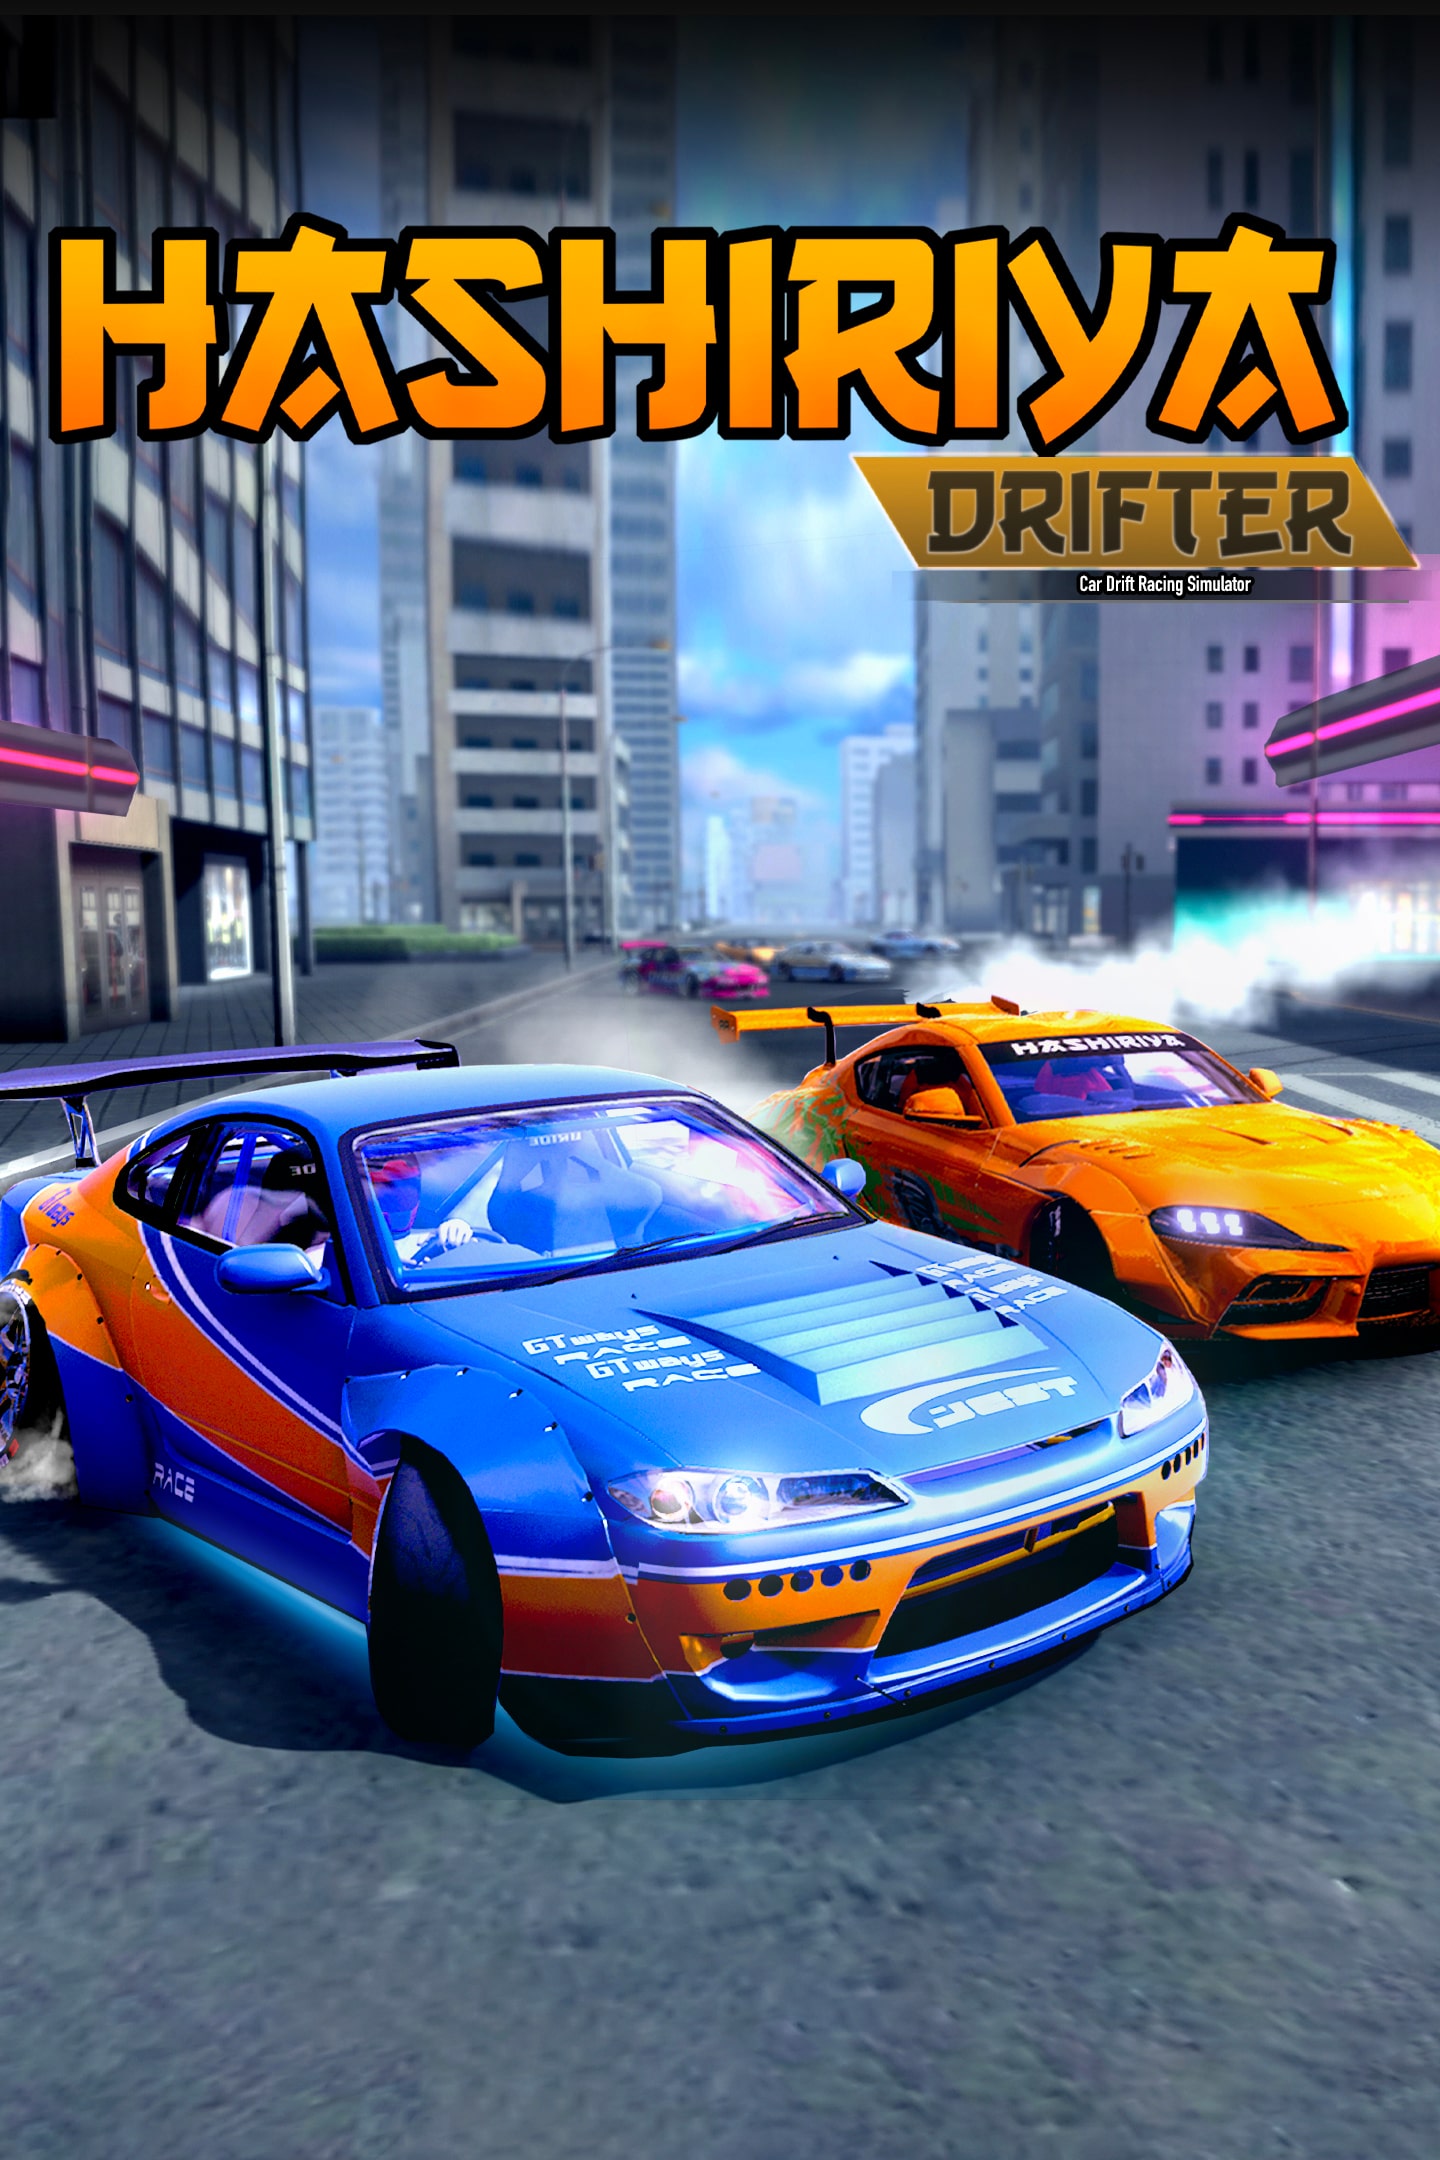 Hashiriya Drifter-Car Racing,Drift,Drag Online Multiplayer Simulator Games  Driving Sim. for Nintendo Switch - Nintendo Official Site